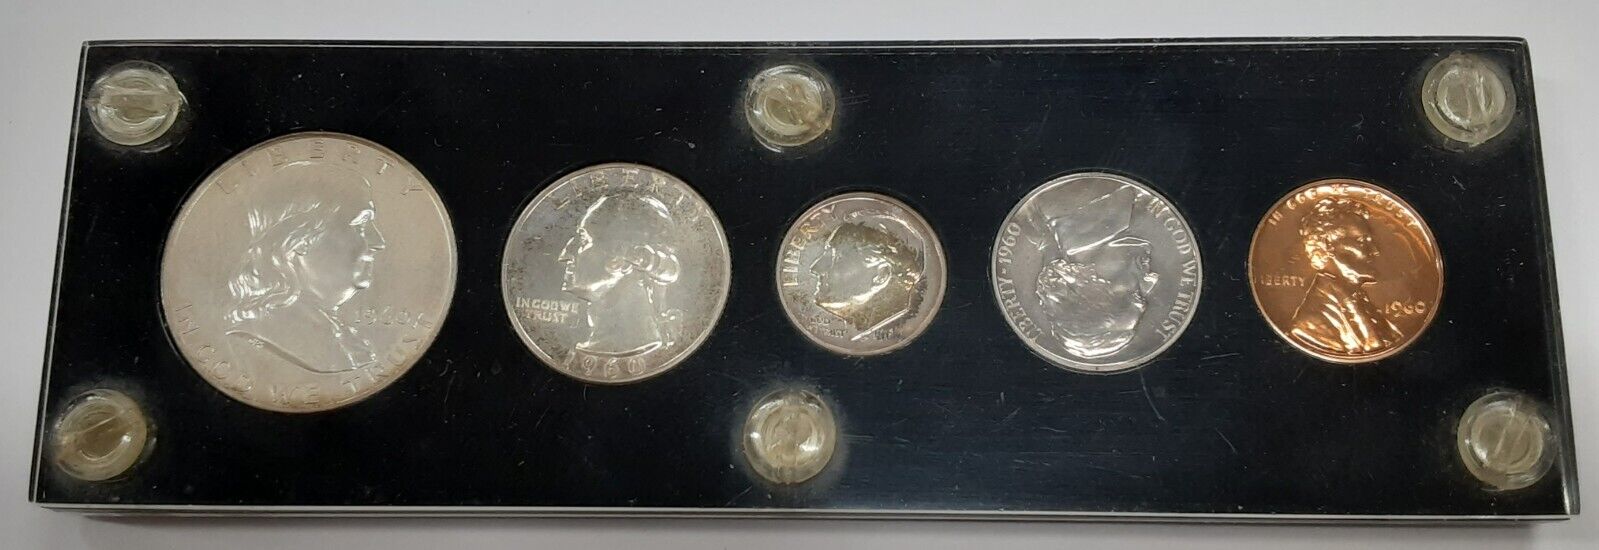 1960 Proof Year Set 5 Silver Coins w/Half, Quarter, & Dime in Black Holder (D)